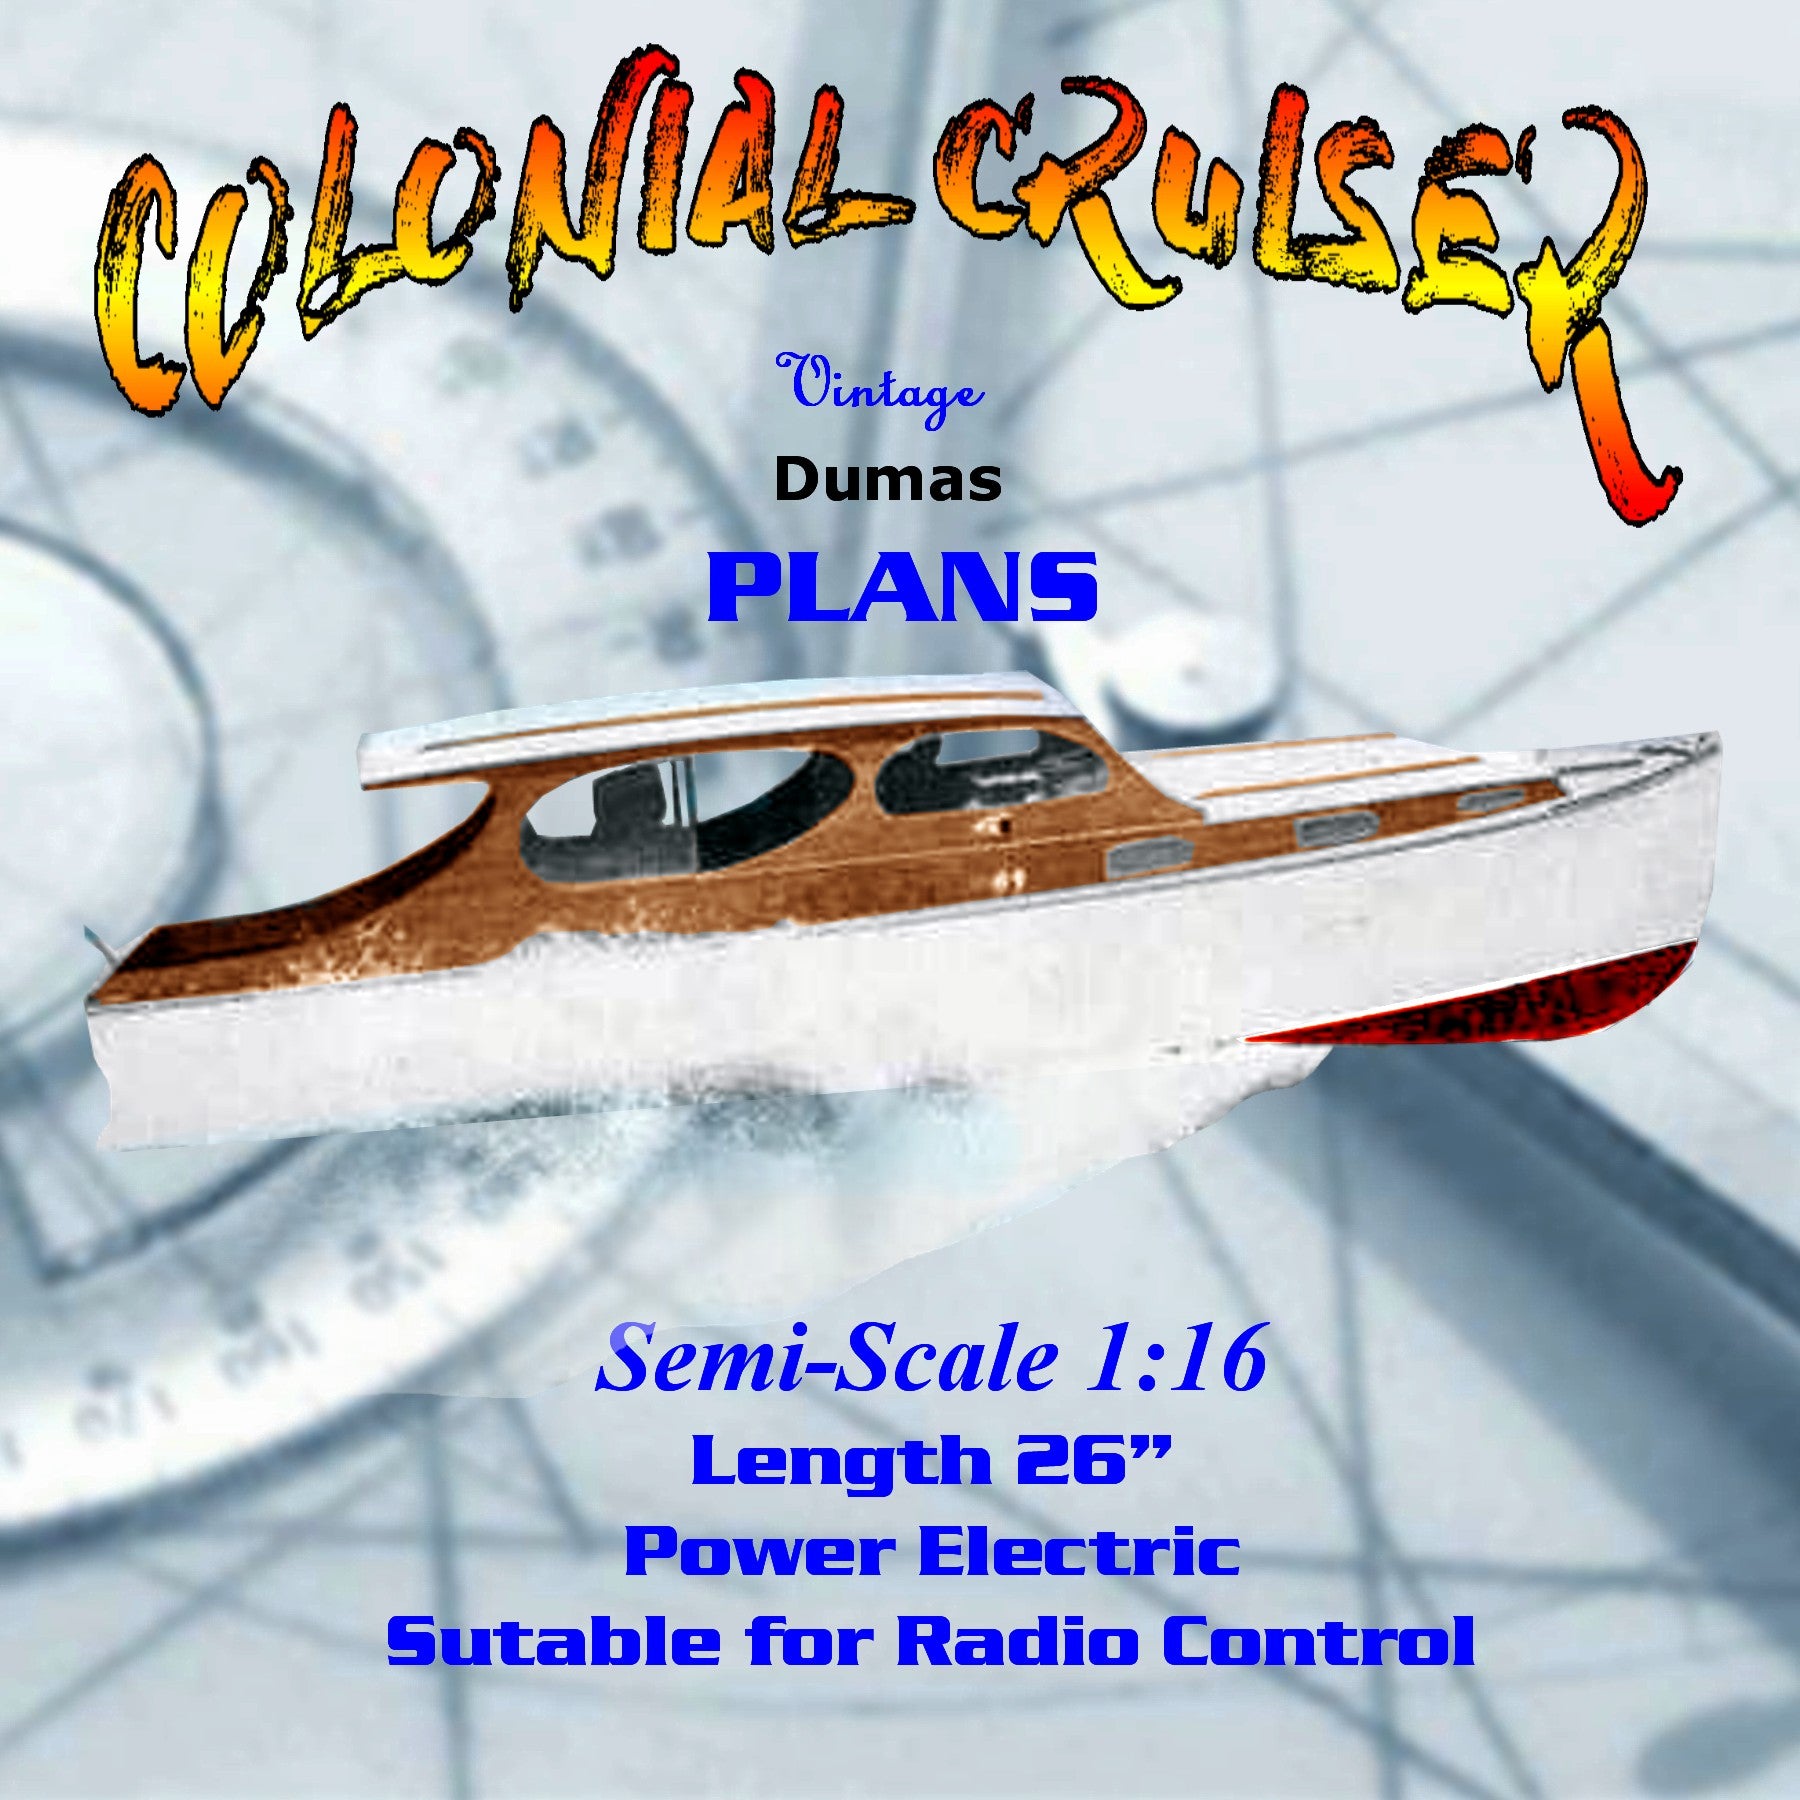 full-size-printed-plan-1:16 semi-scale-dumas-colonial-cruiser-radio-control